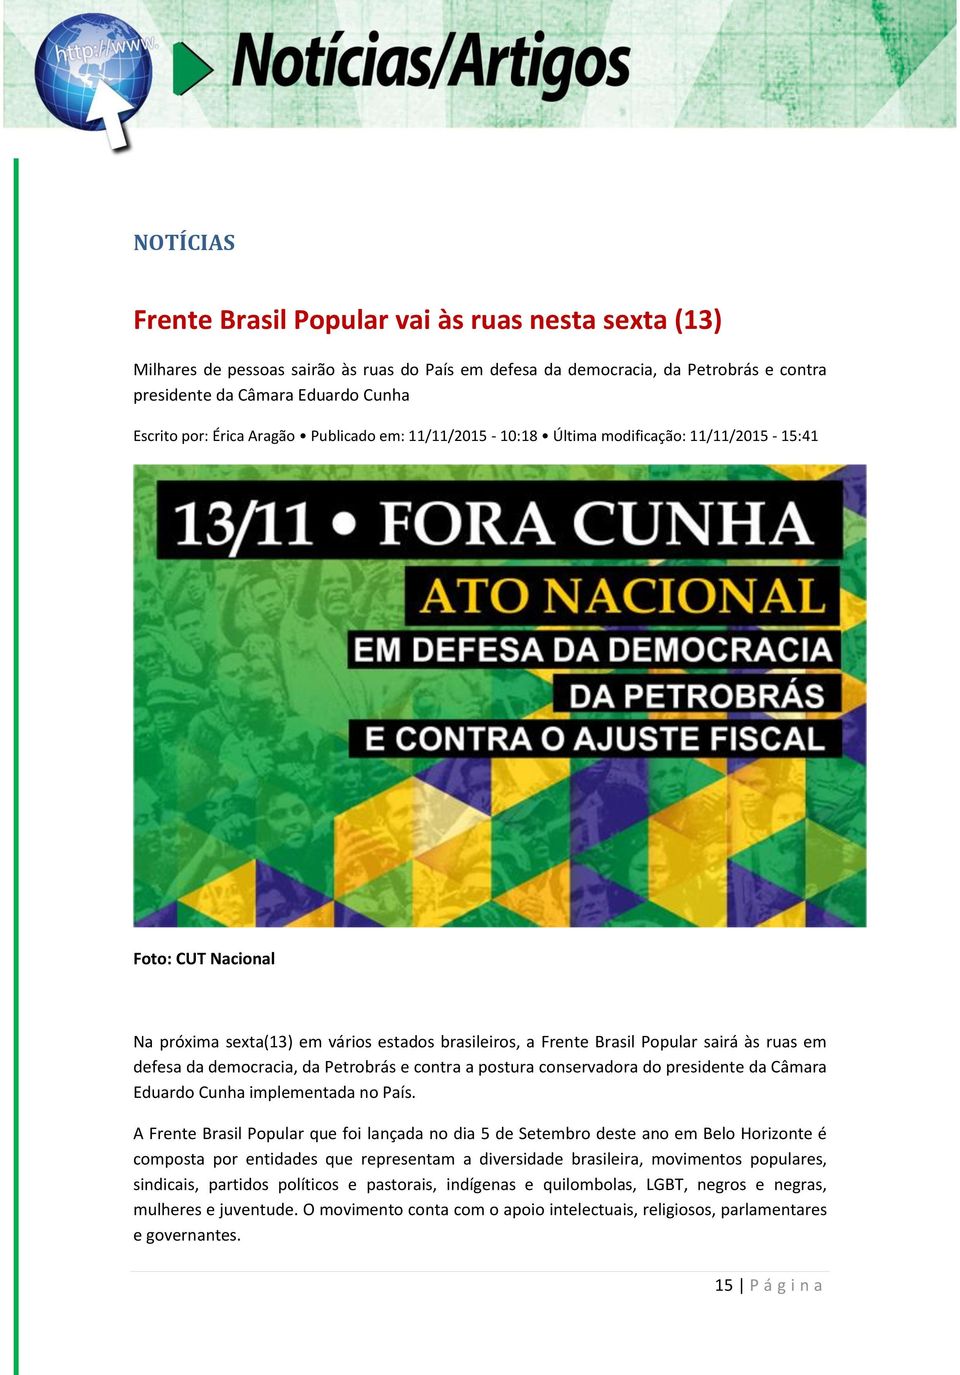 da democracia, da Petrobrás e contra a postura conservadora do presidente da Câmara Eduardo Cunha implementada no País.